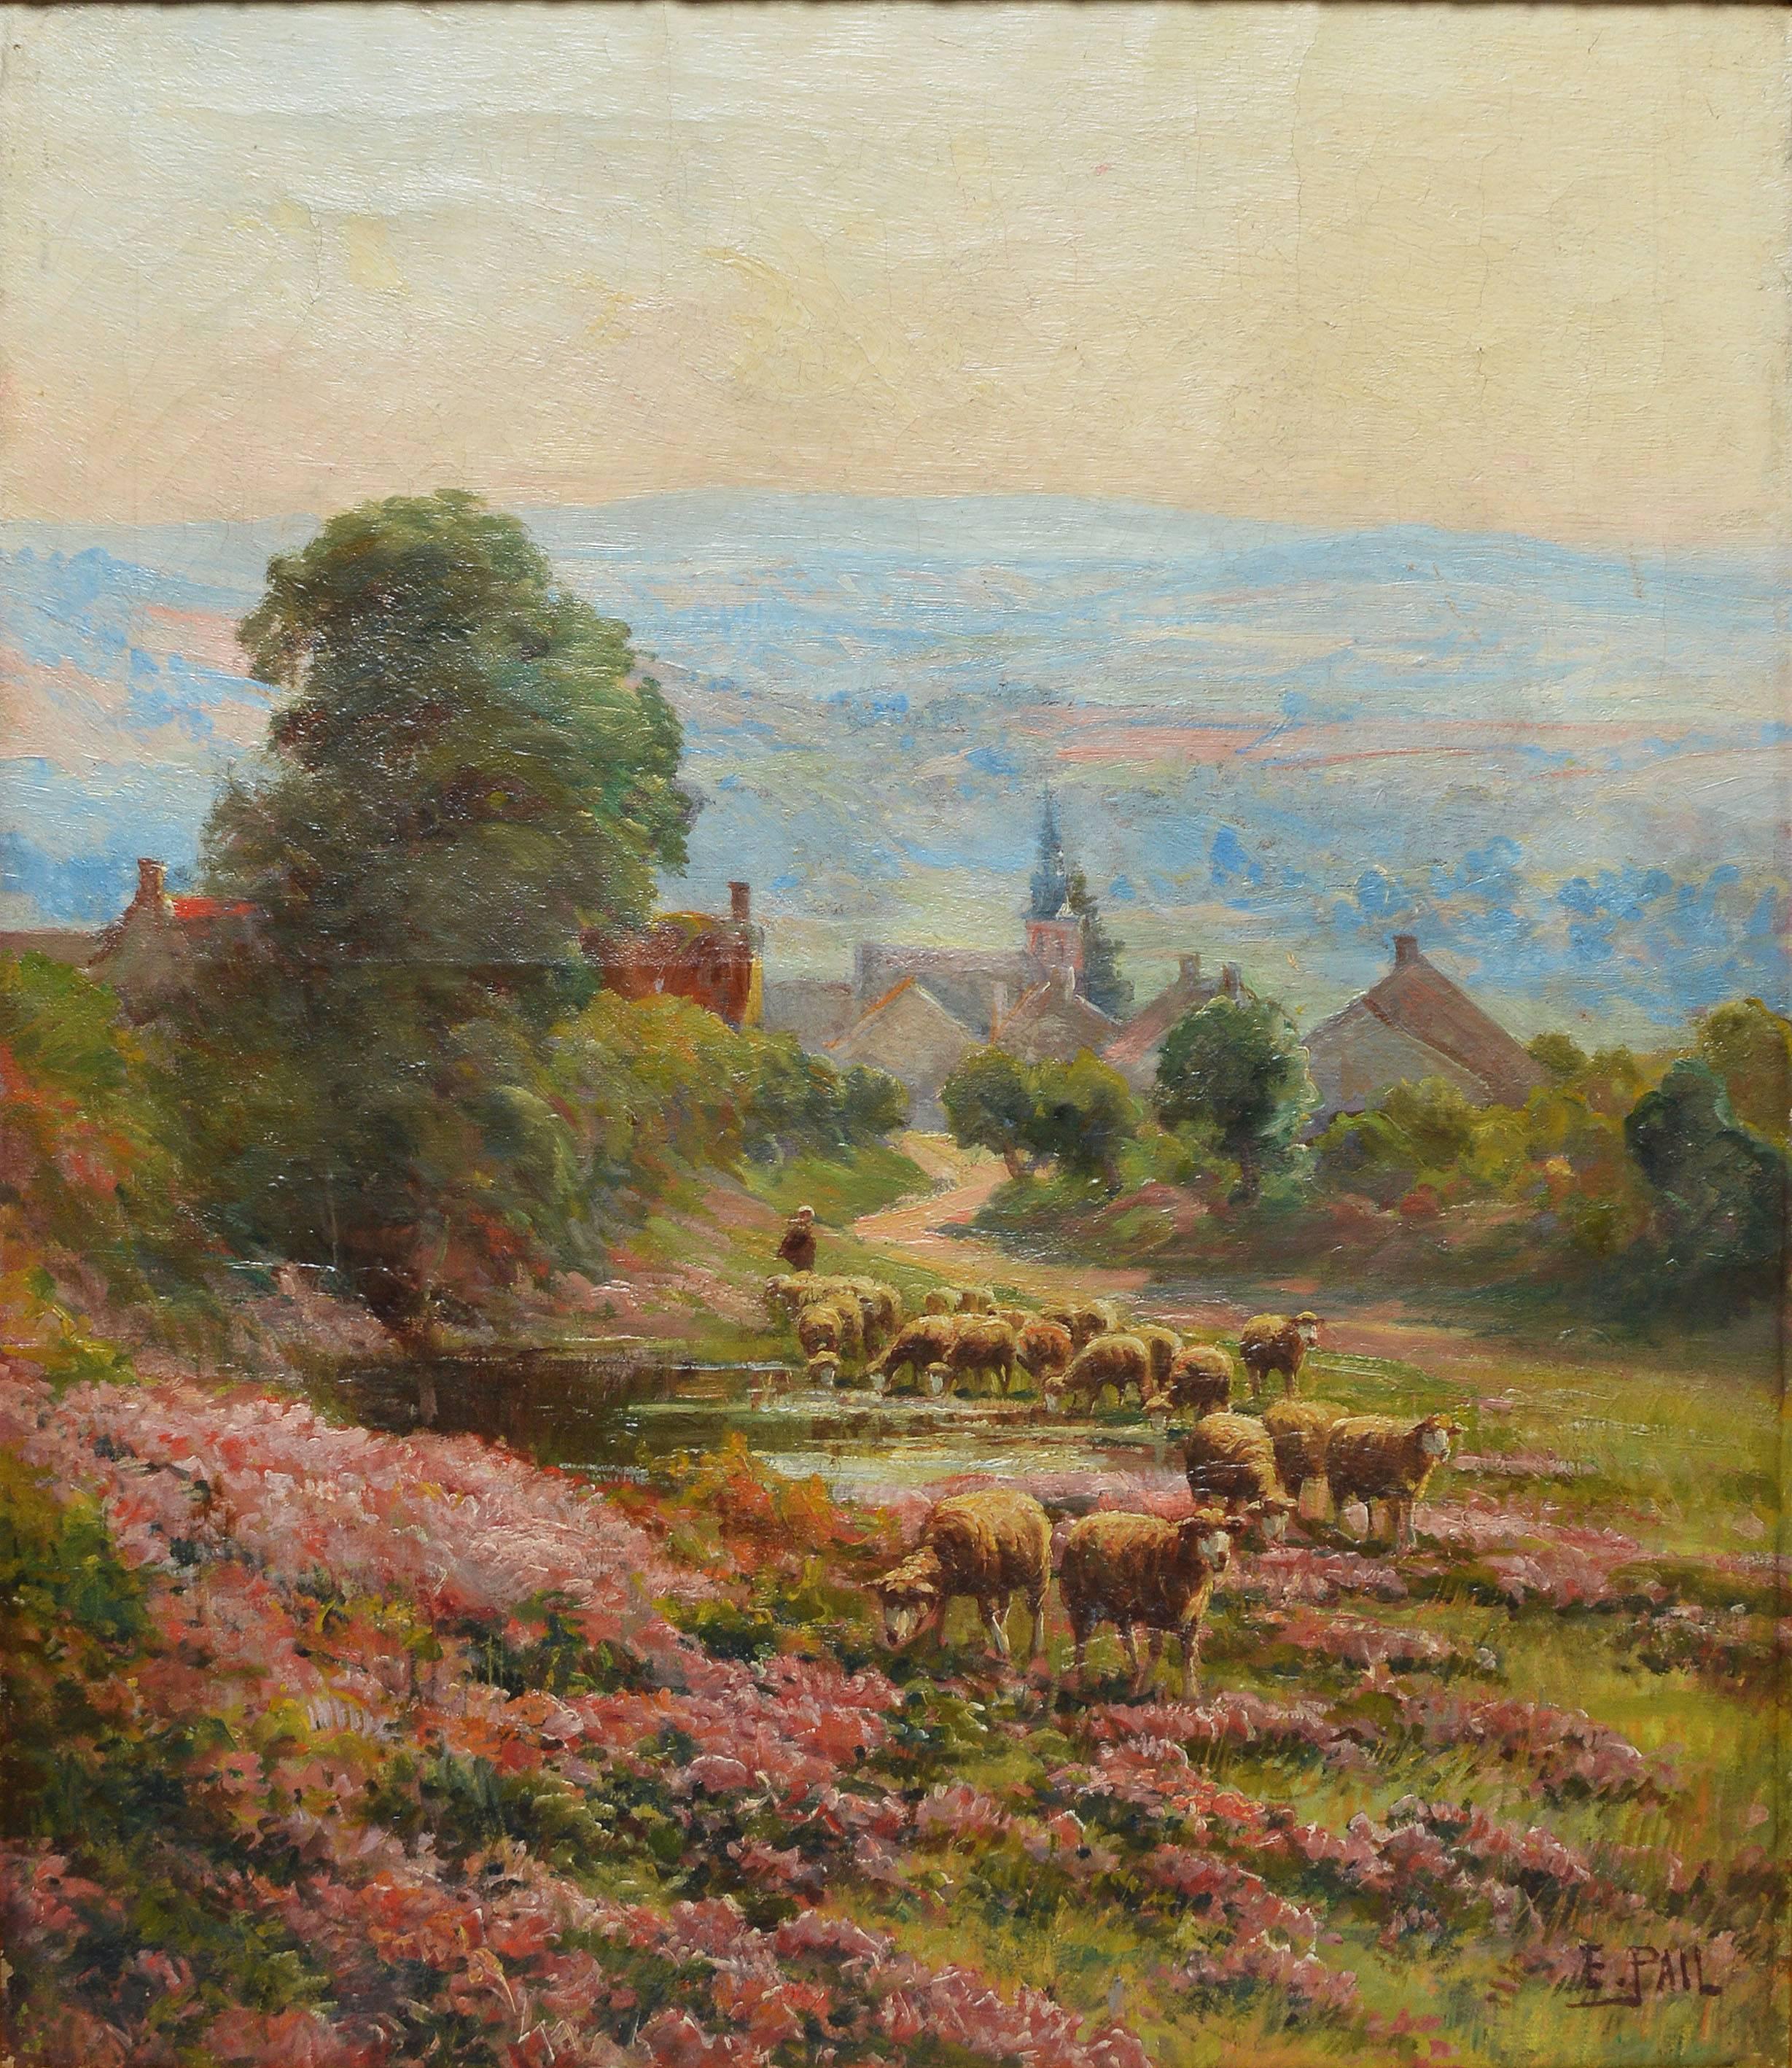 Sheep Grazing among Wild Flowers by Edouard Pail 2